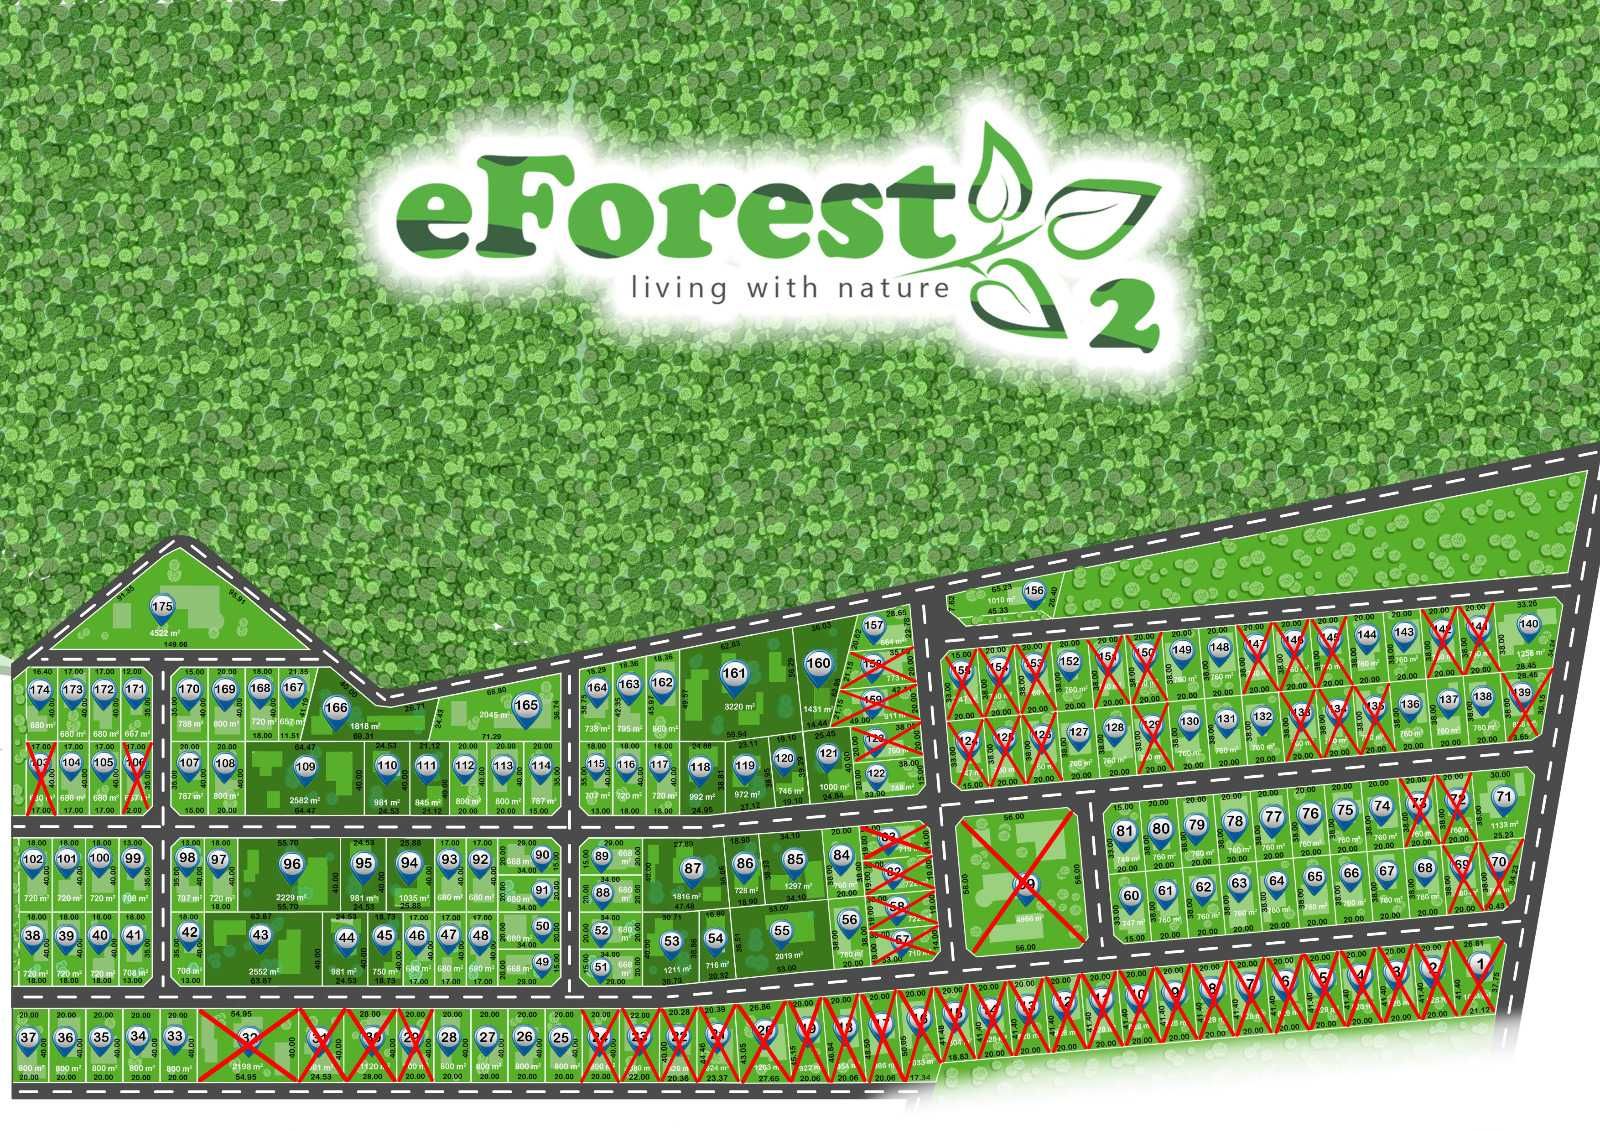 eForest 2, loturi de teren construibil, Crevedia